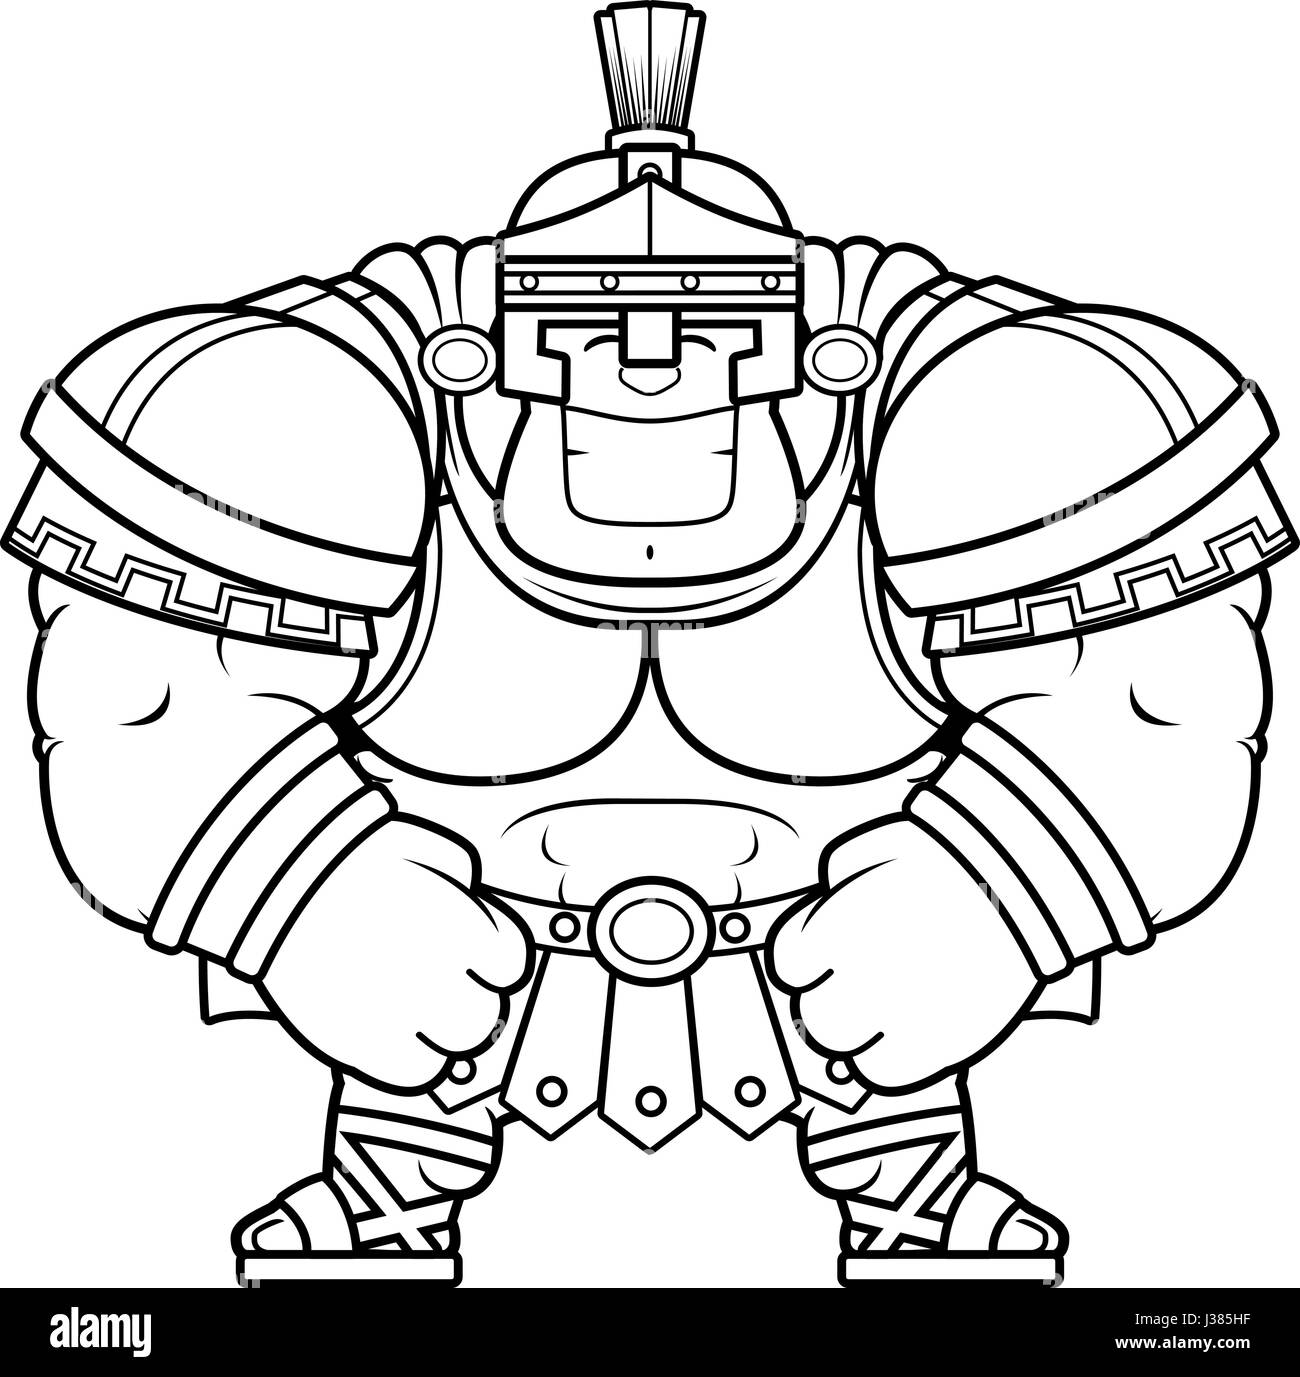 A cartoon illustration of a muscular Roman Centurion in armor smiling. Stock Vector